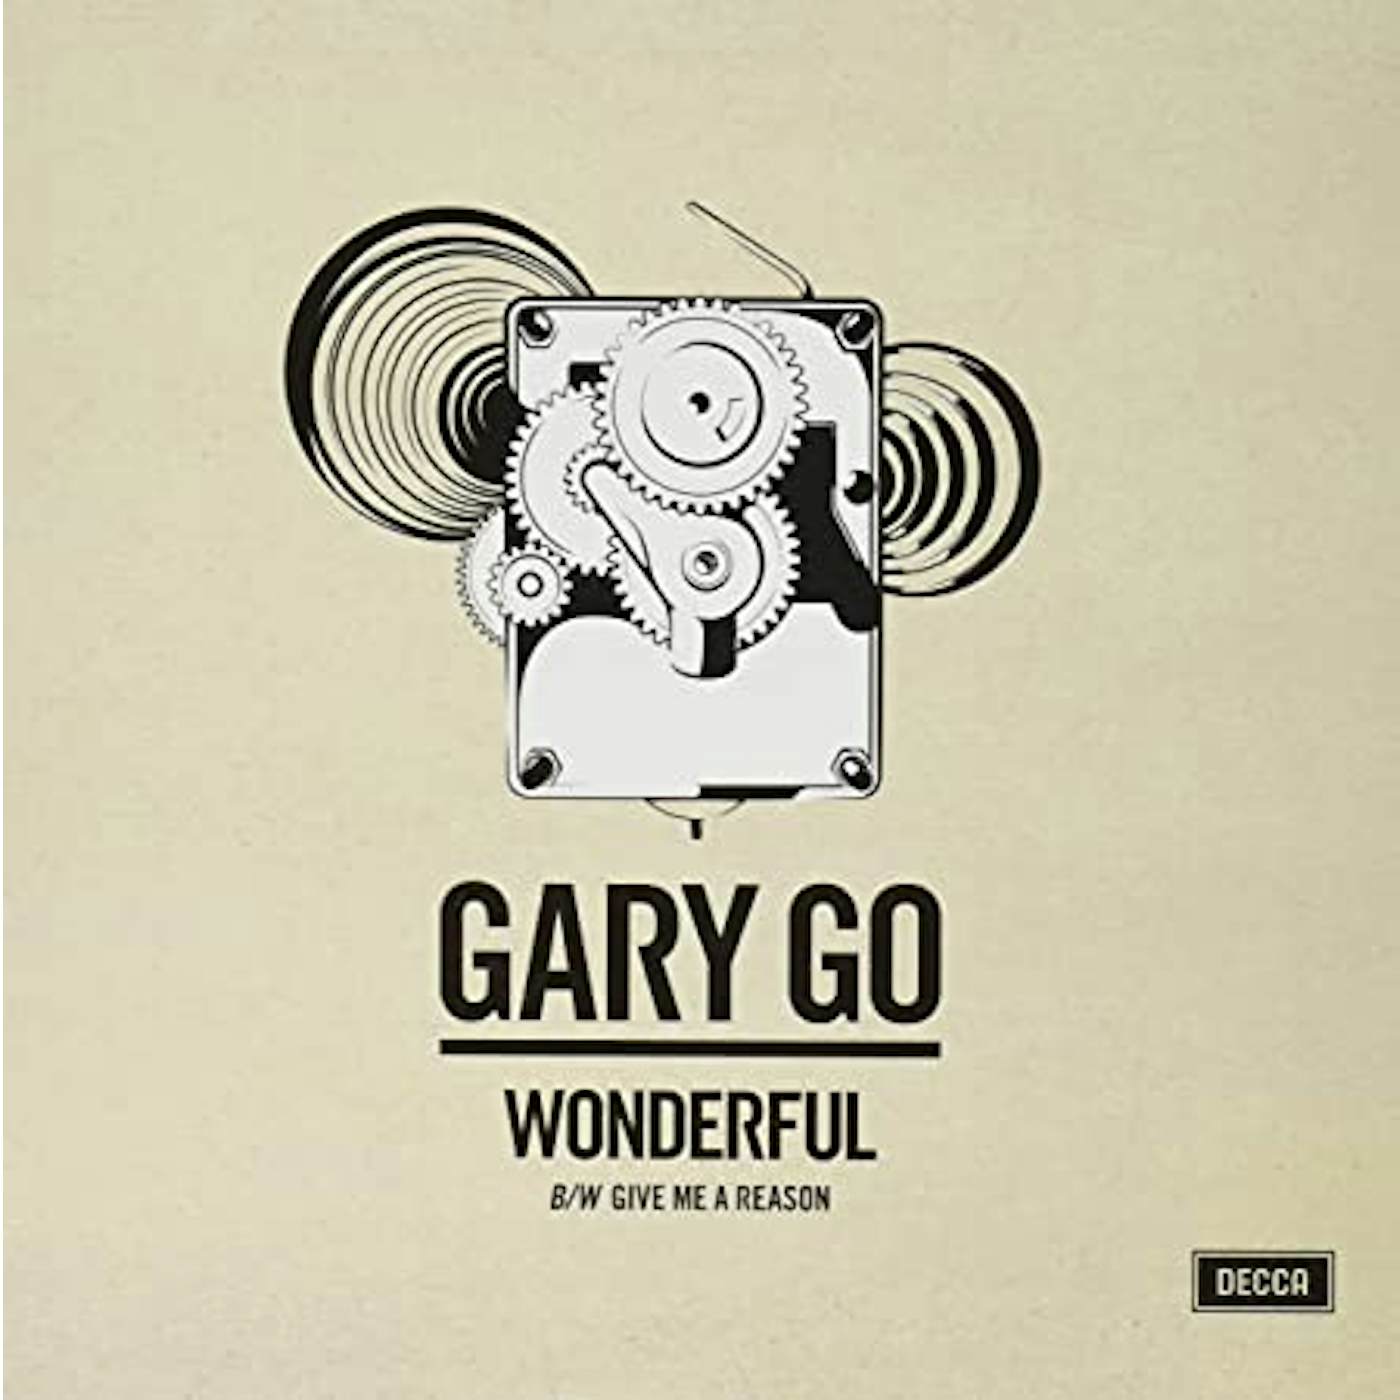 Gary Go WONDERFUL / GIVE ME A REASON Vinyl Record